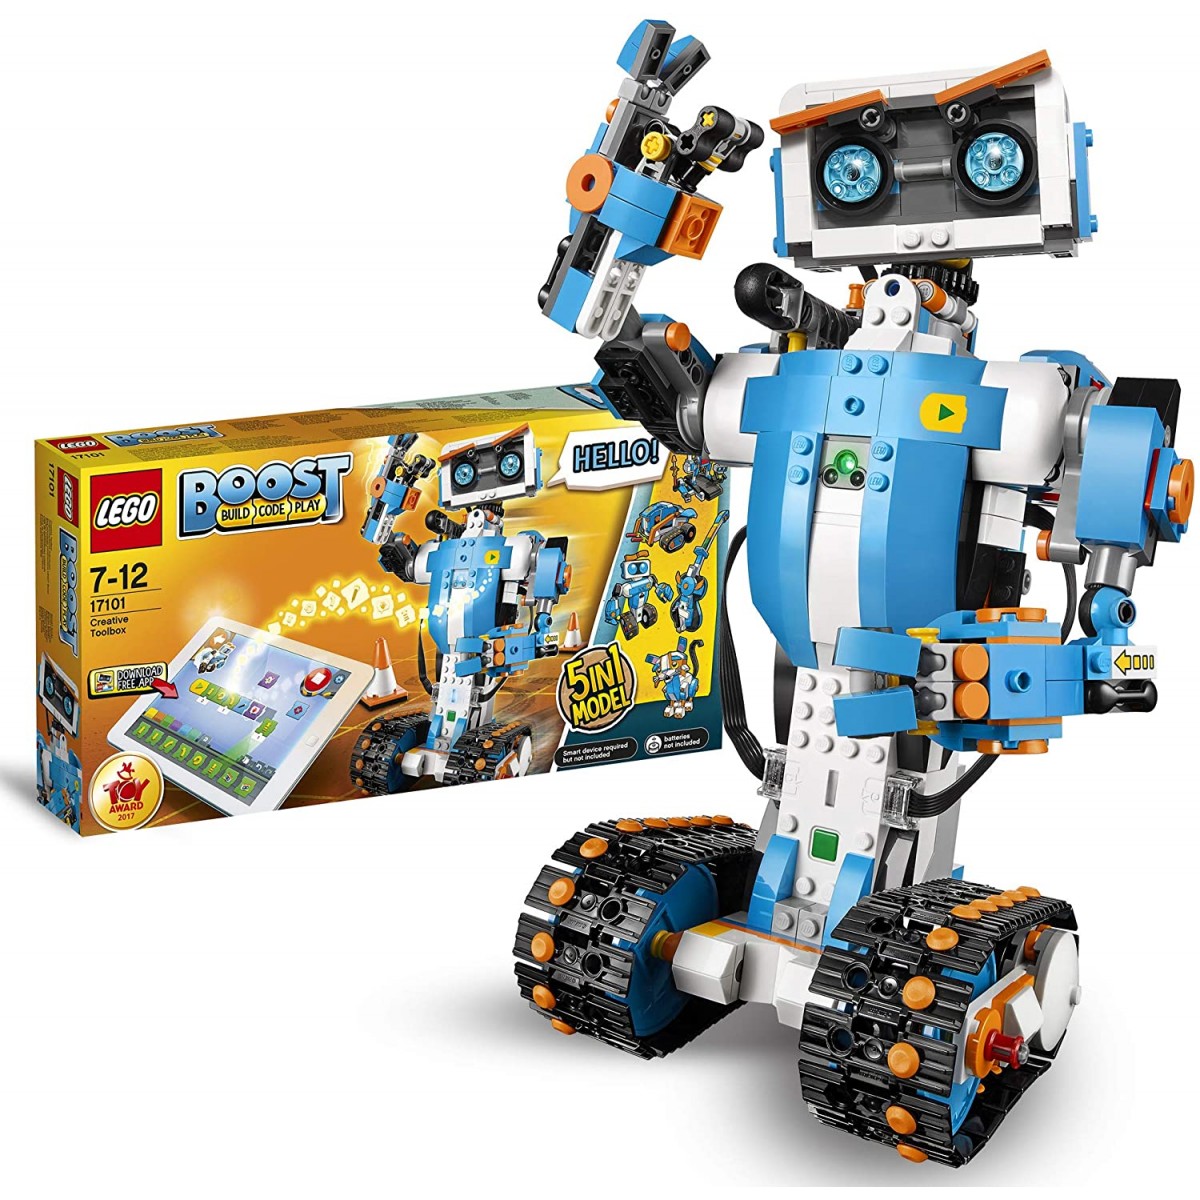 Robot interattivo LEGO Boost - Toolbox Creativa